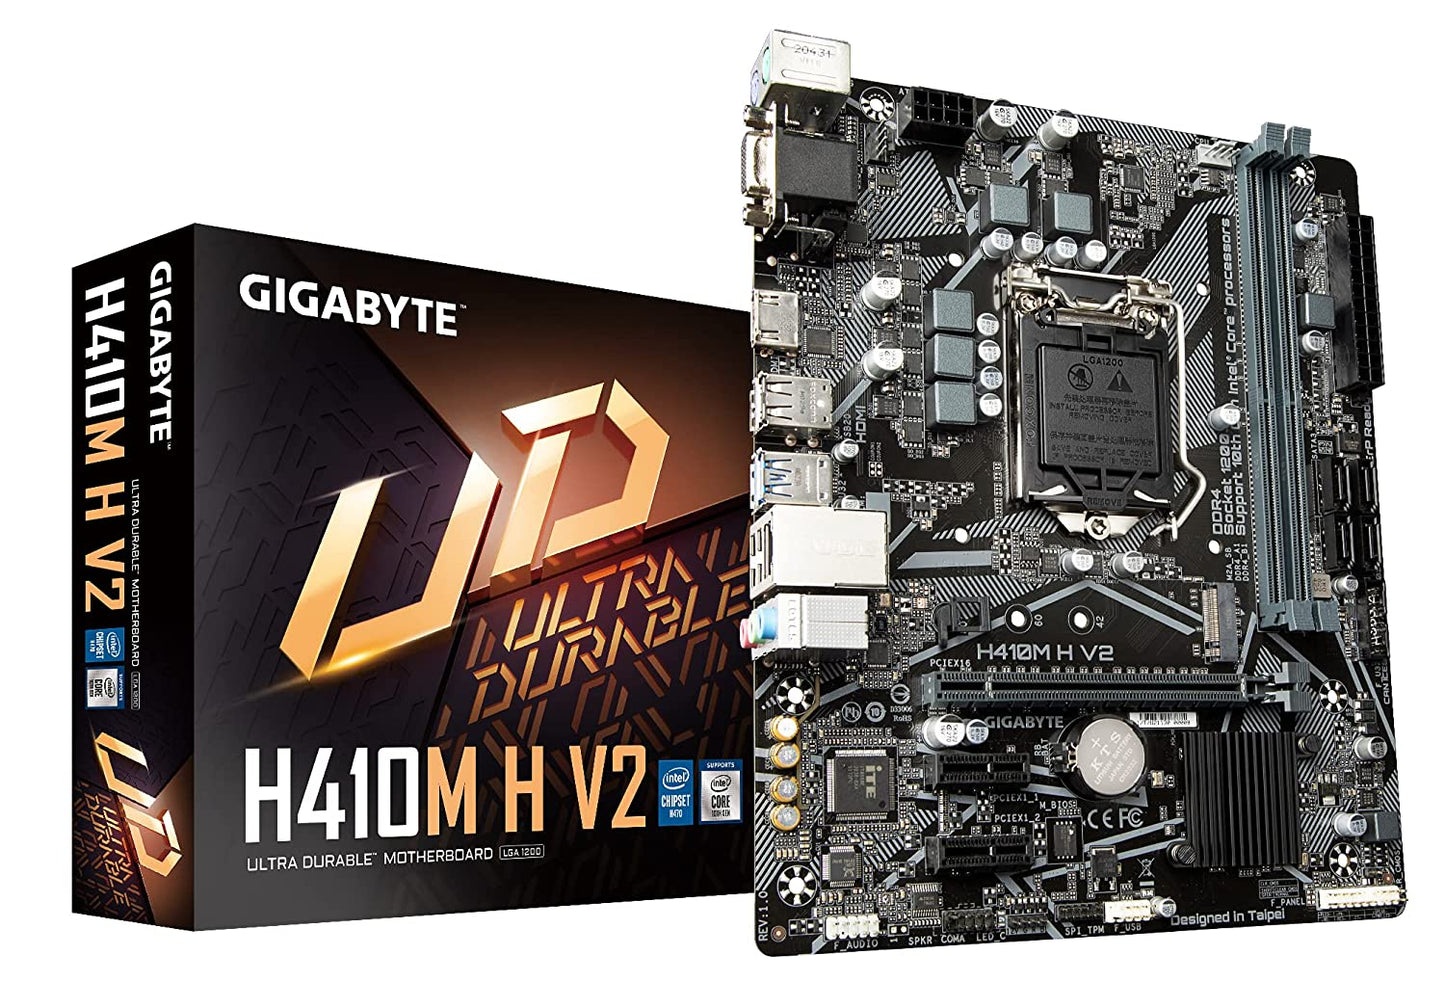 GIGABYTE H410M H V2 Ultra Durable Motherboard with Intel®, GbE LAN, Anti-Sulfur Resistor, Smart Fan 5